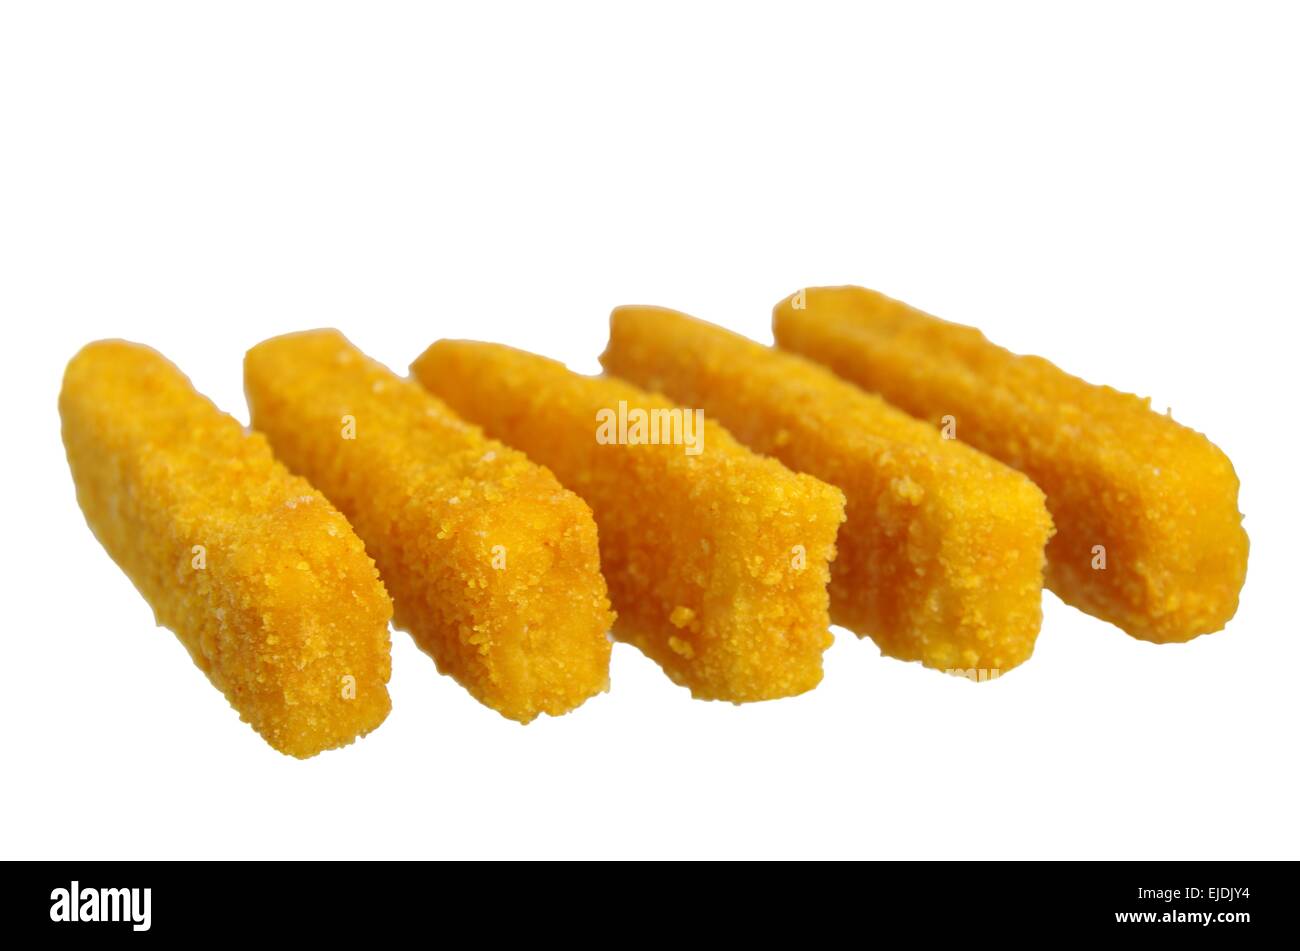 fried fish fingers on white background Stock Photo